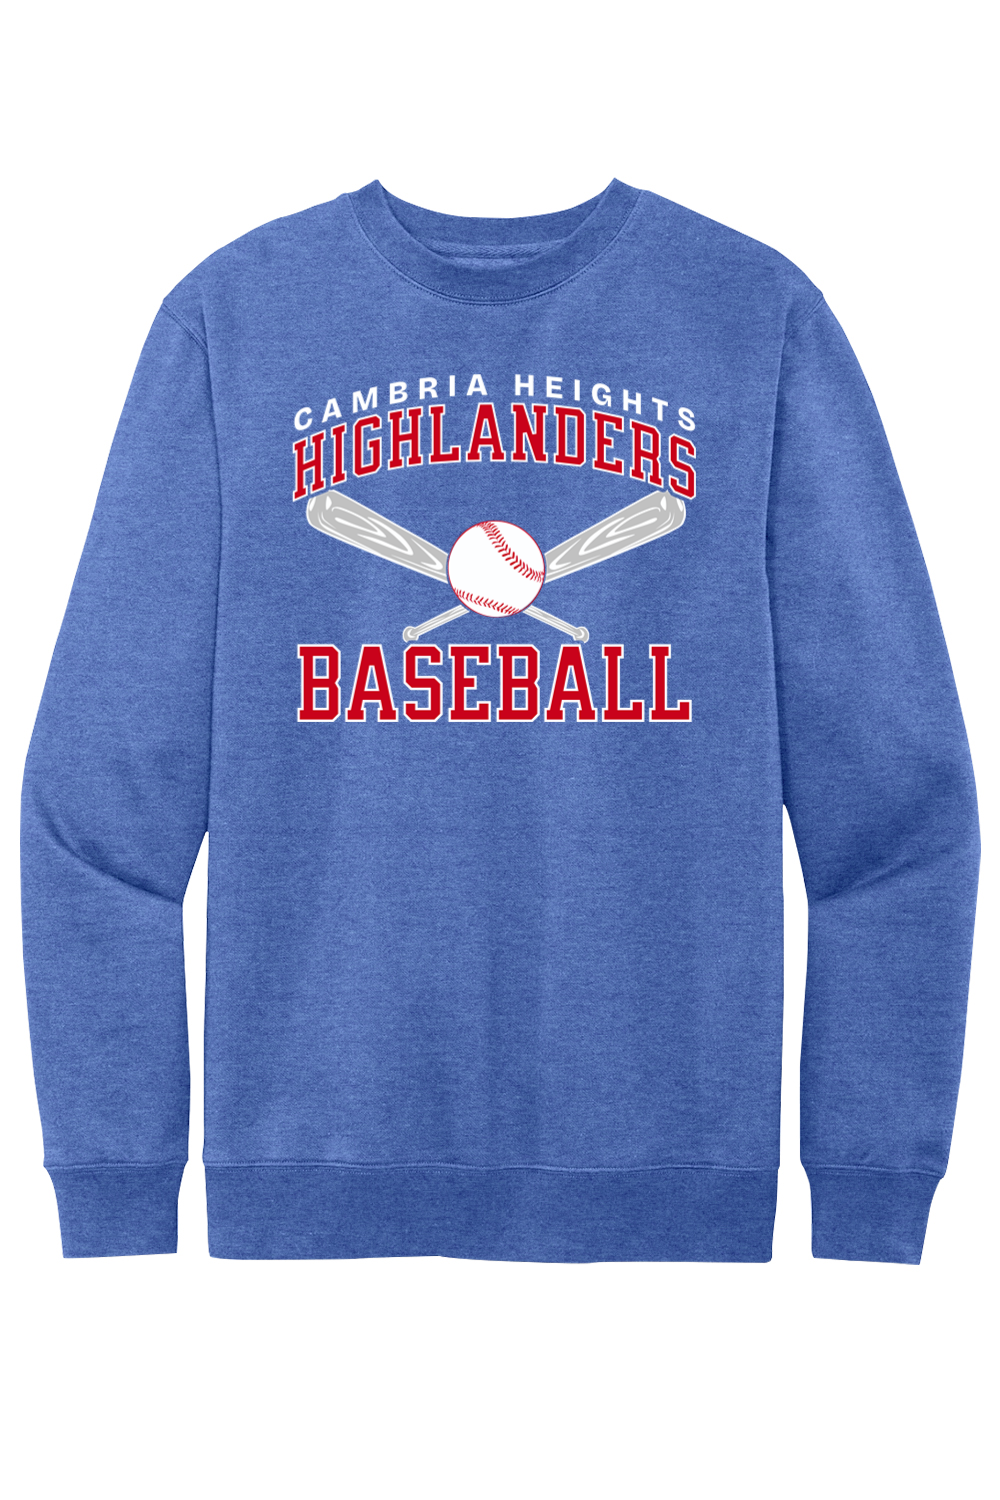 Cambria Heights Highlanders Baseball - Retro - Fleece Crewneck Sweatshirt - Yinzylvania